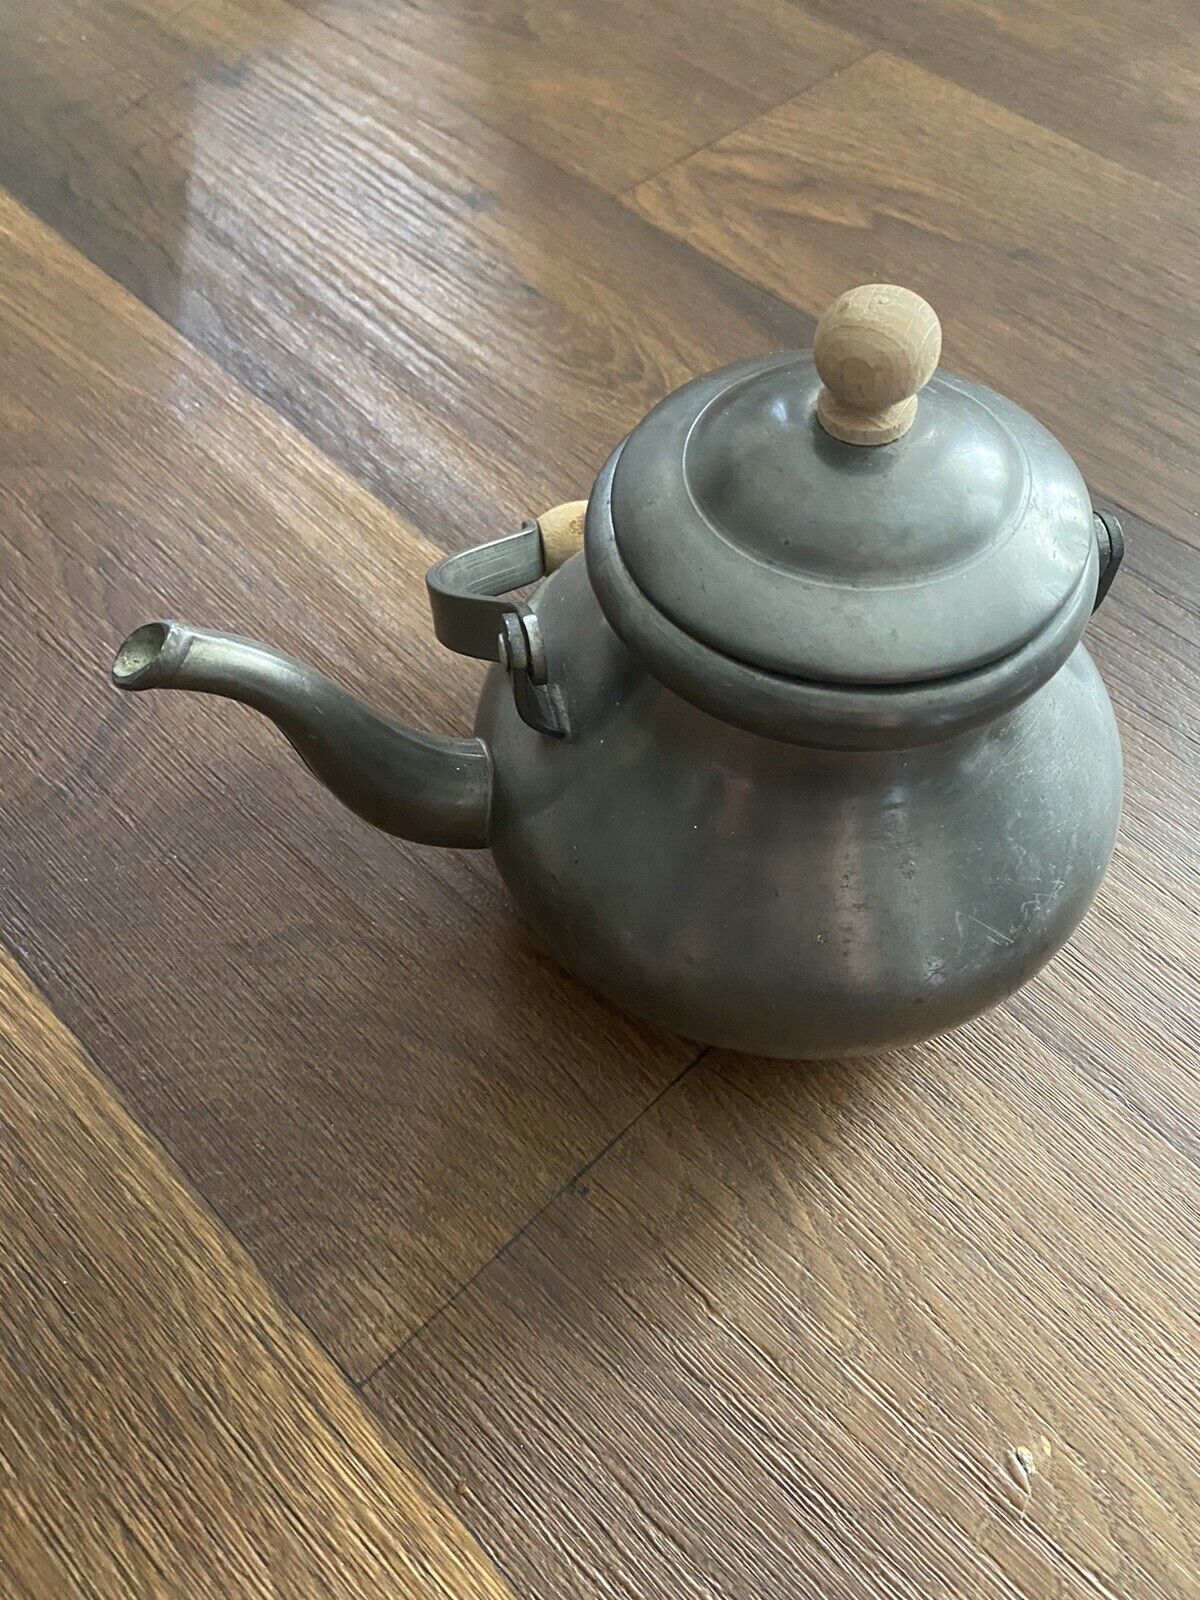 Vintage frieling zion 92% pewter kettle Germany